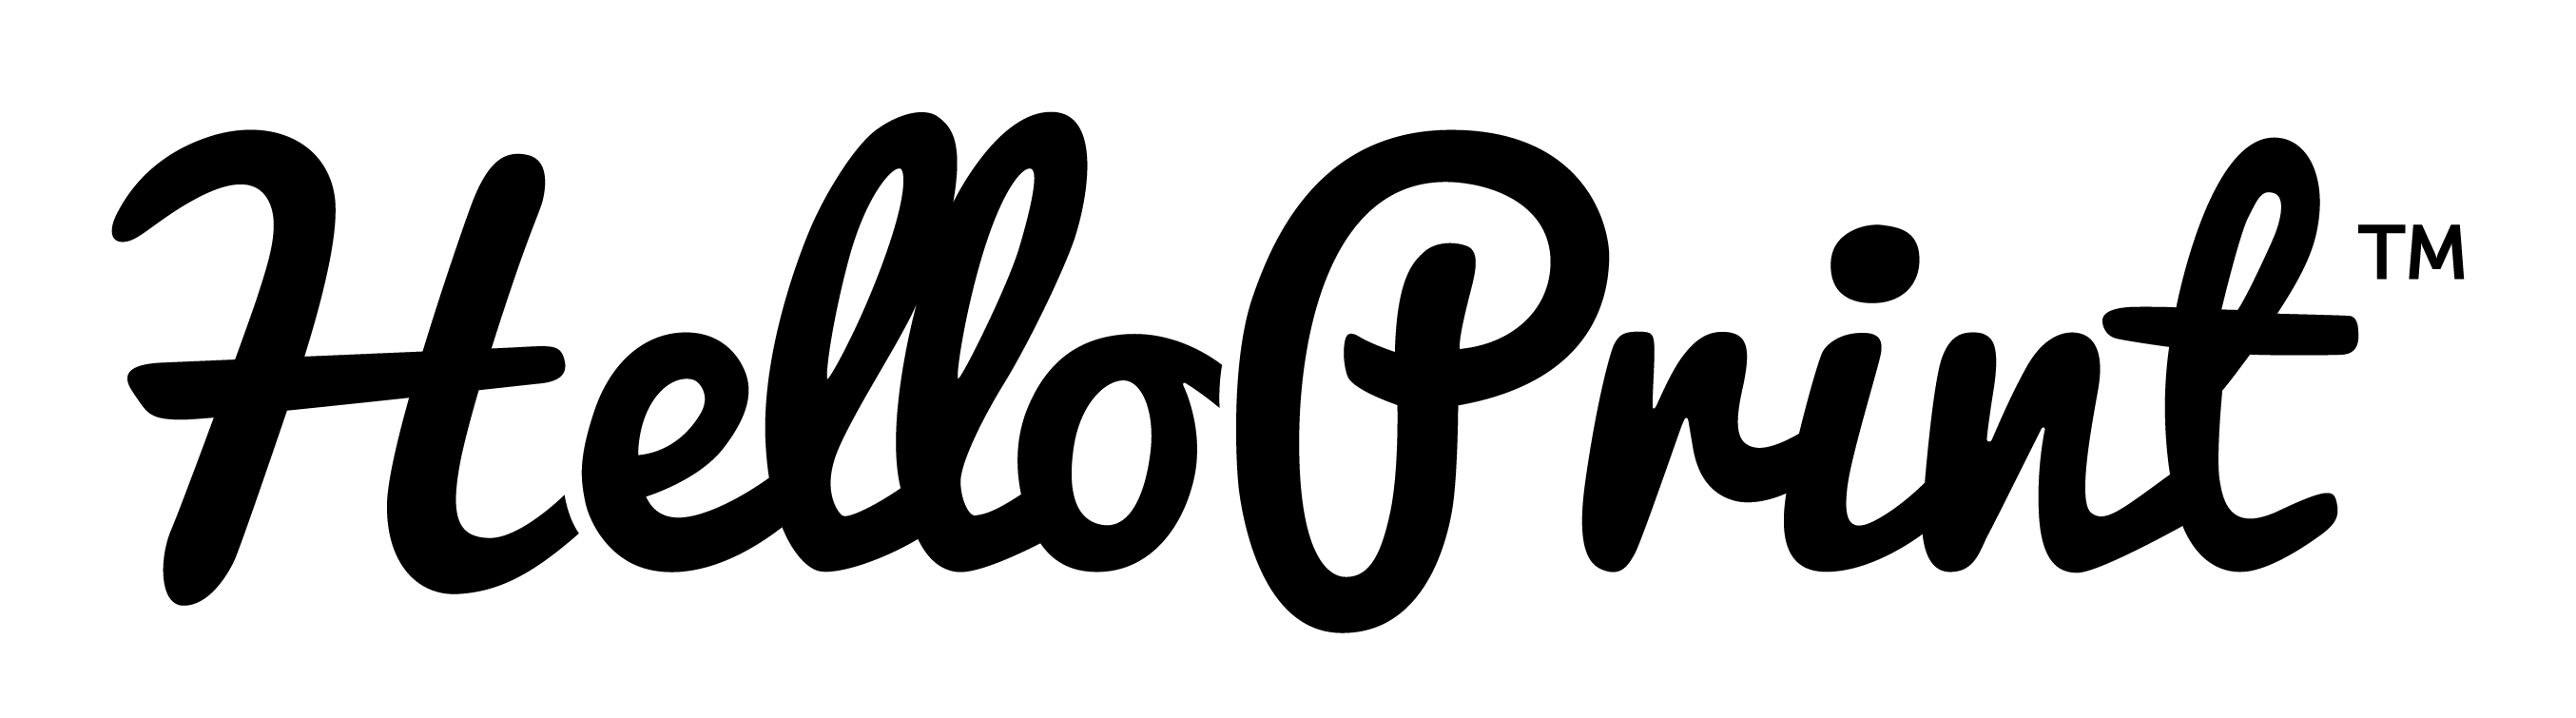 Helloprint Logo Imprimeur Immobilier